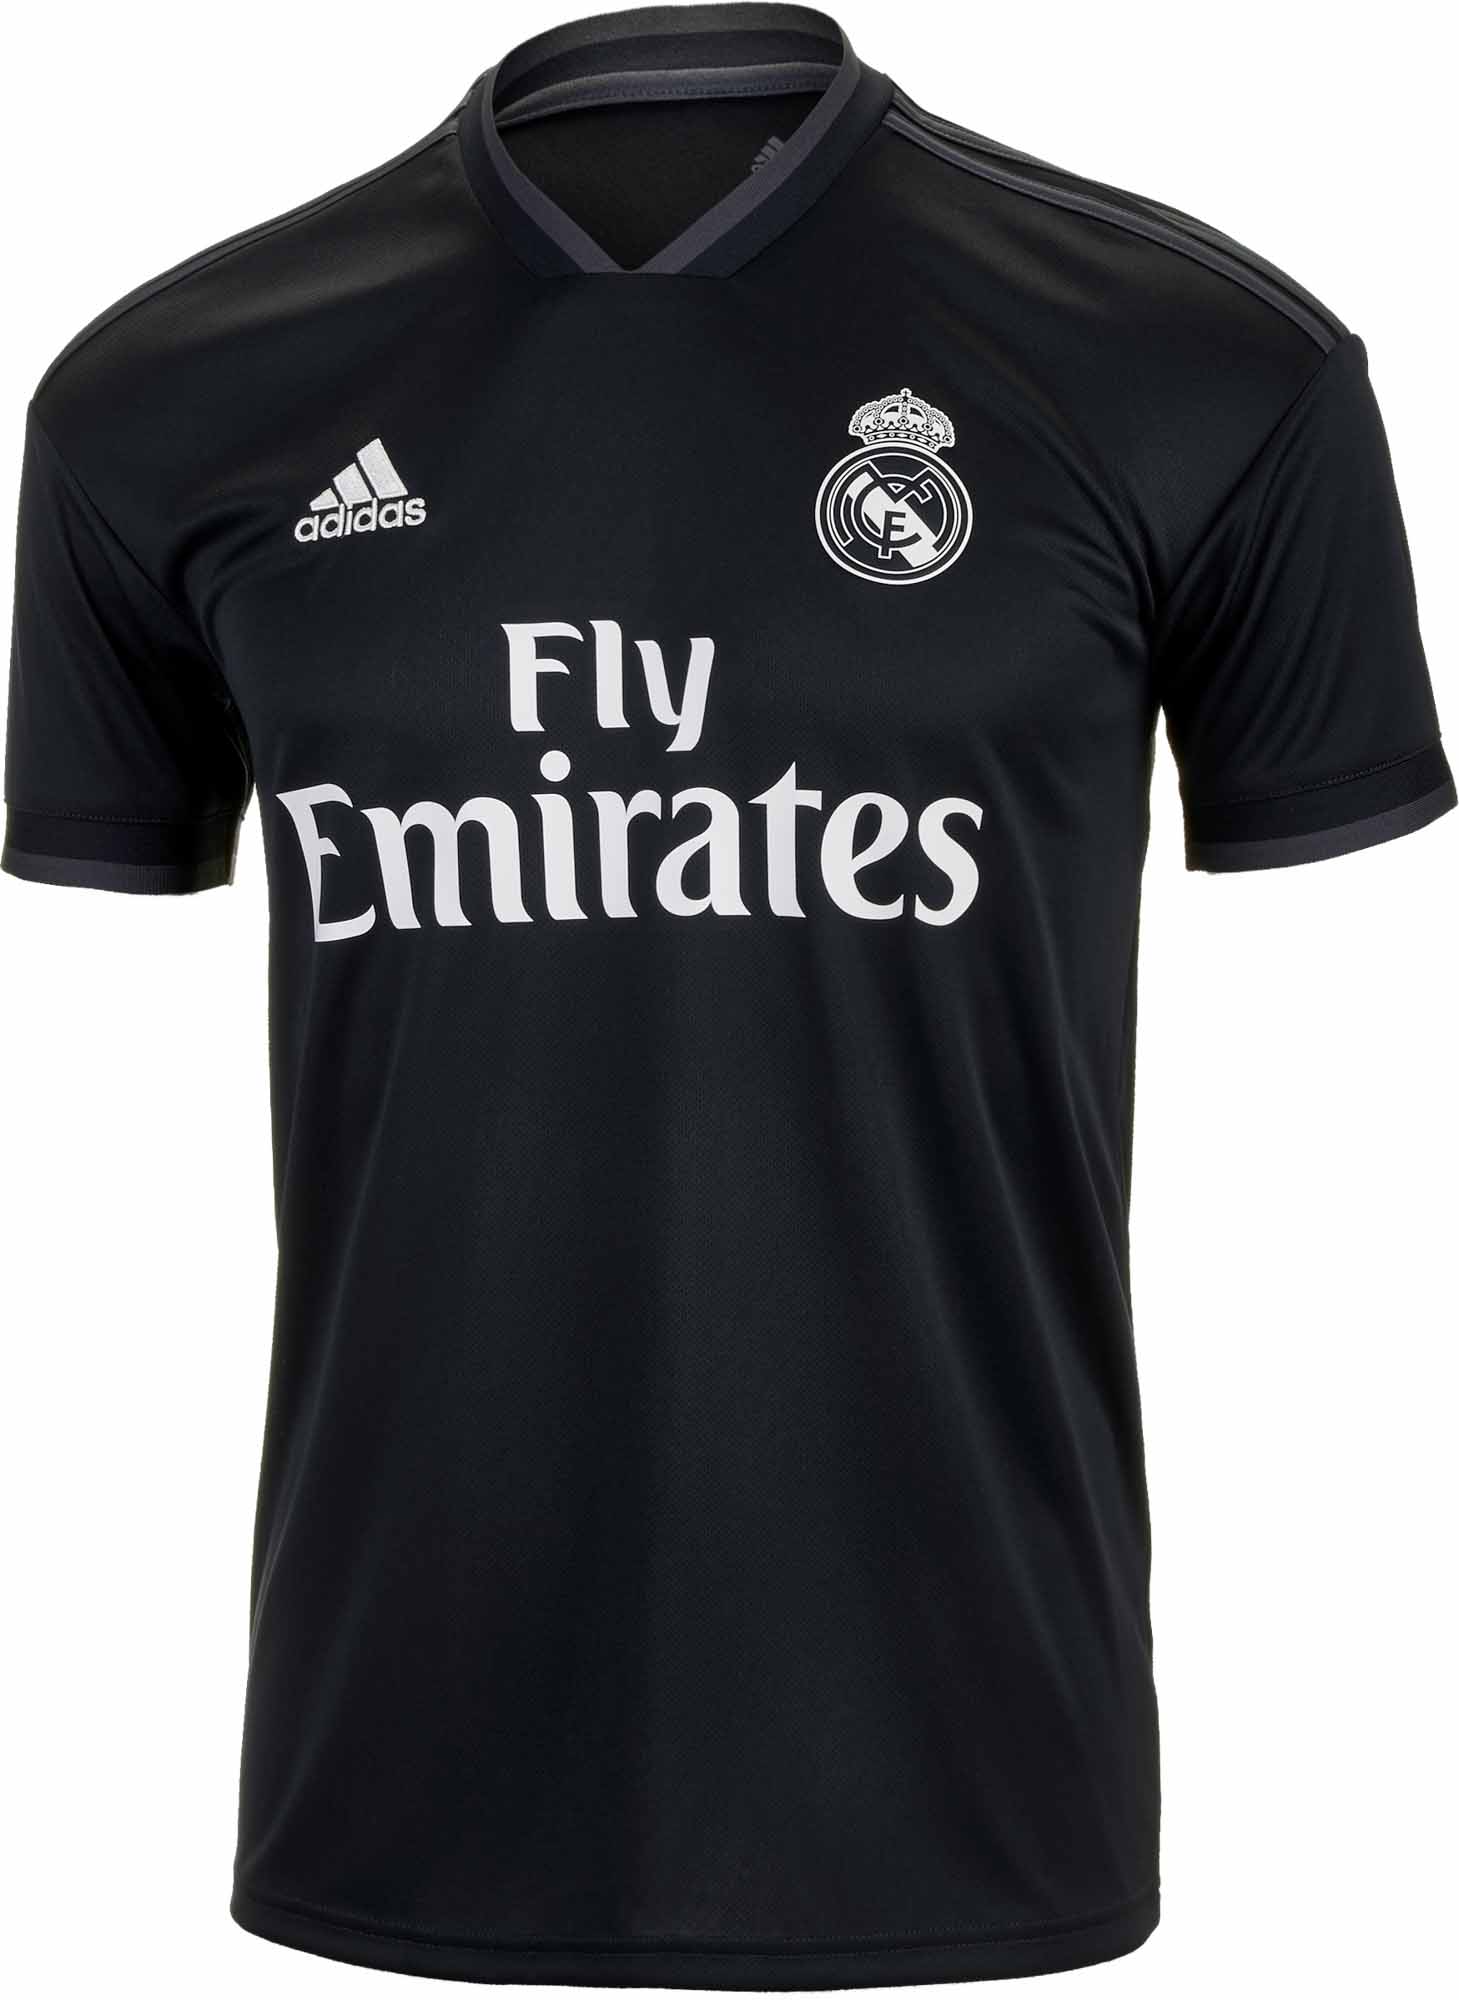 2018/19 adidas Real Madrid Away Jersey - Soccer Master